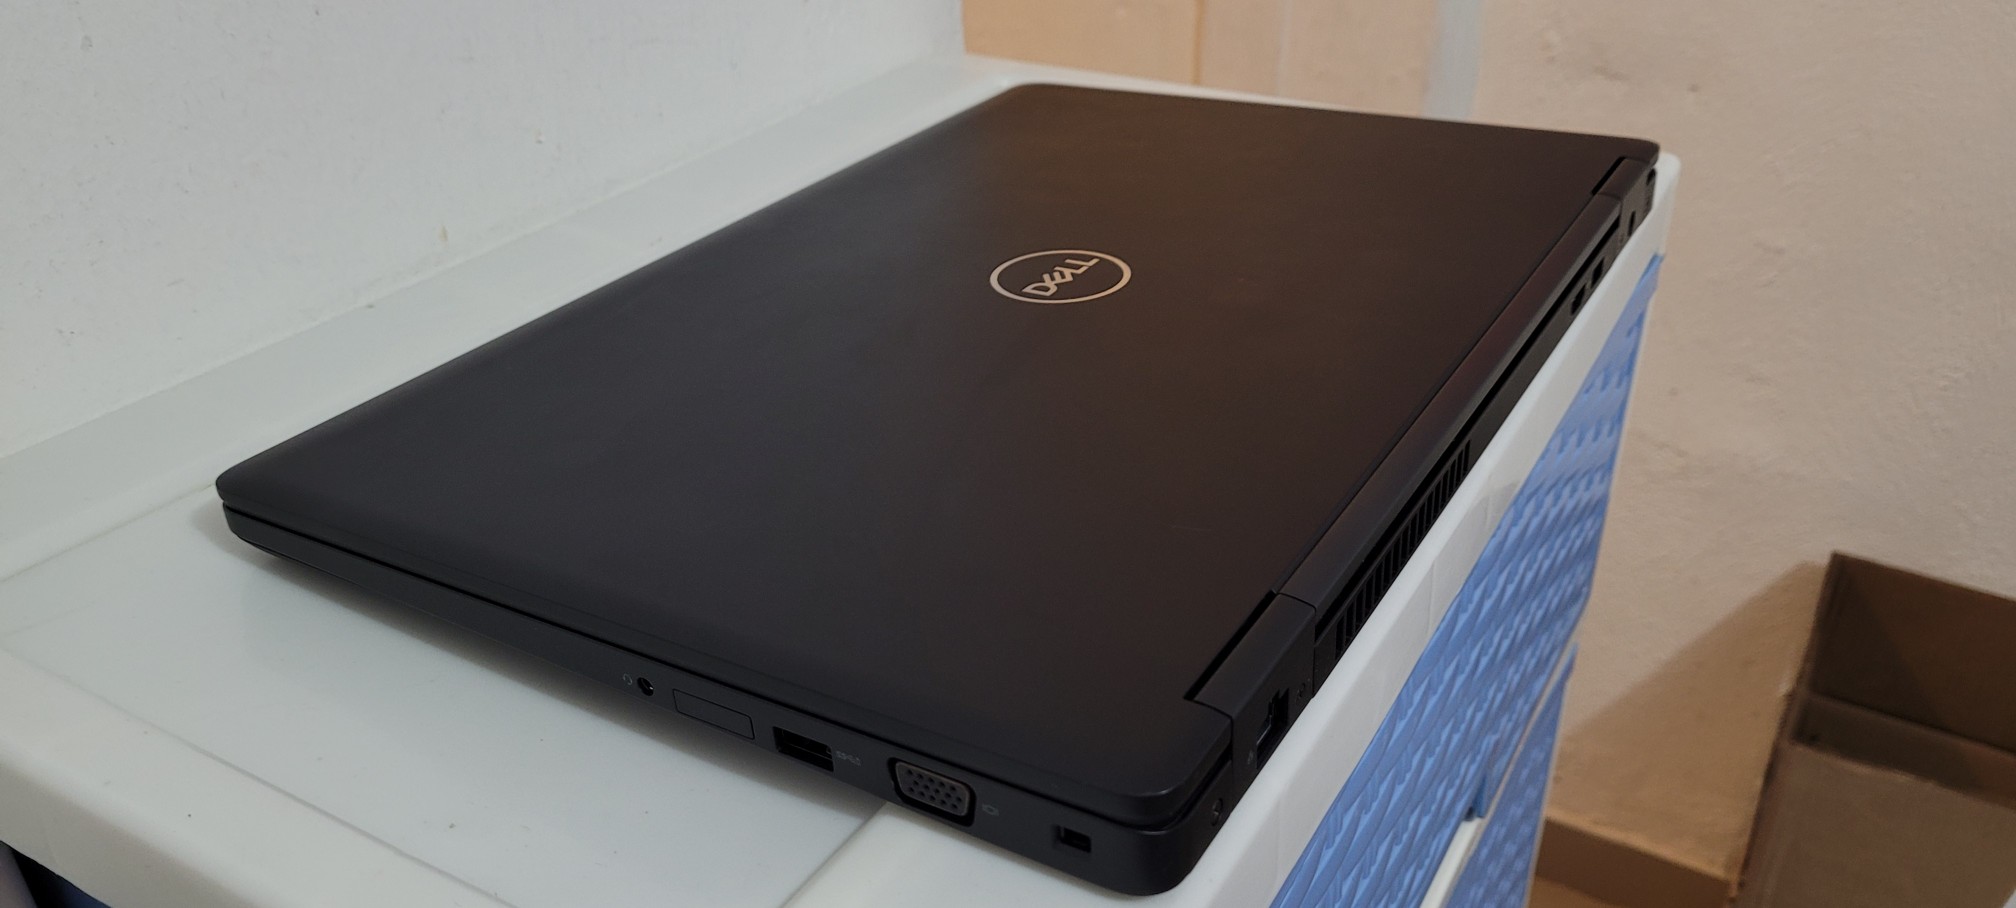 computadoras y laptops - Dell 5580 17 Pulg Core i5 7ma Gen Ram 16gb ddr4 Disco 256gb SSD Nvidea 940mx 6gb 2